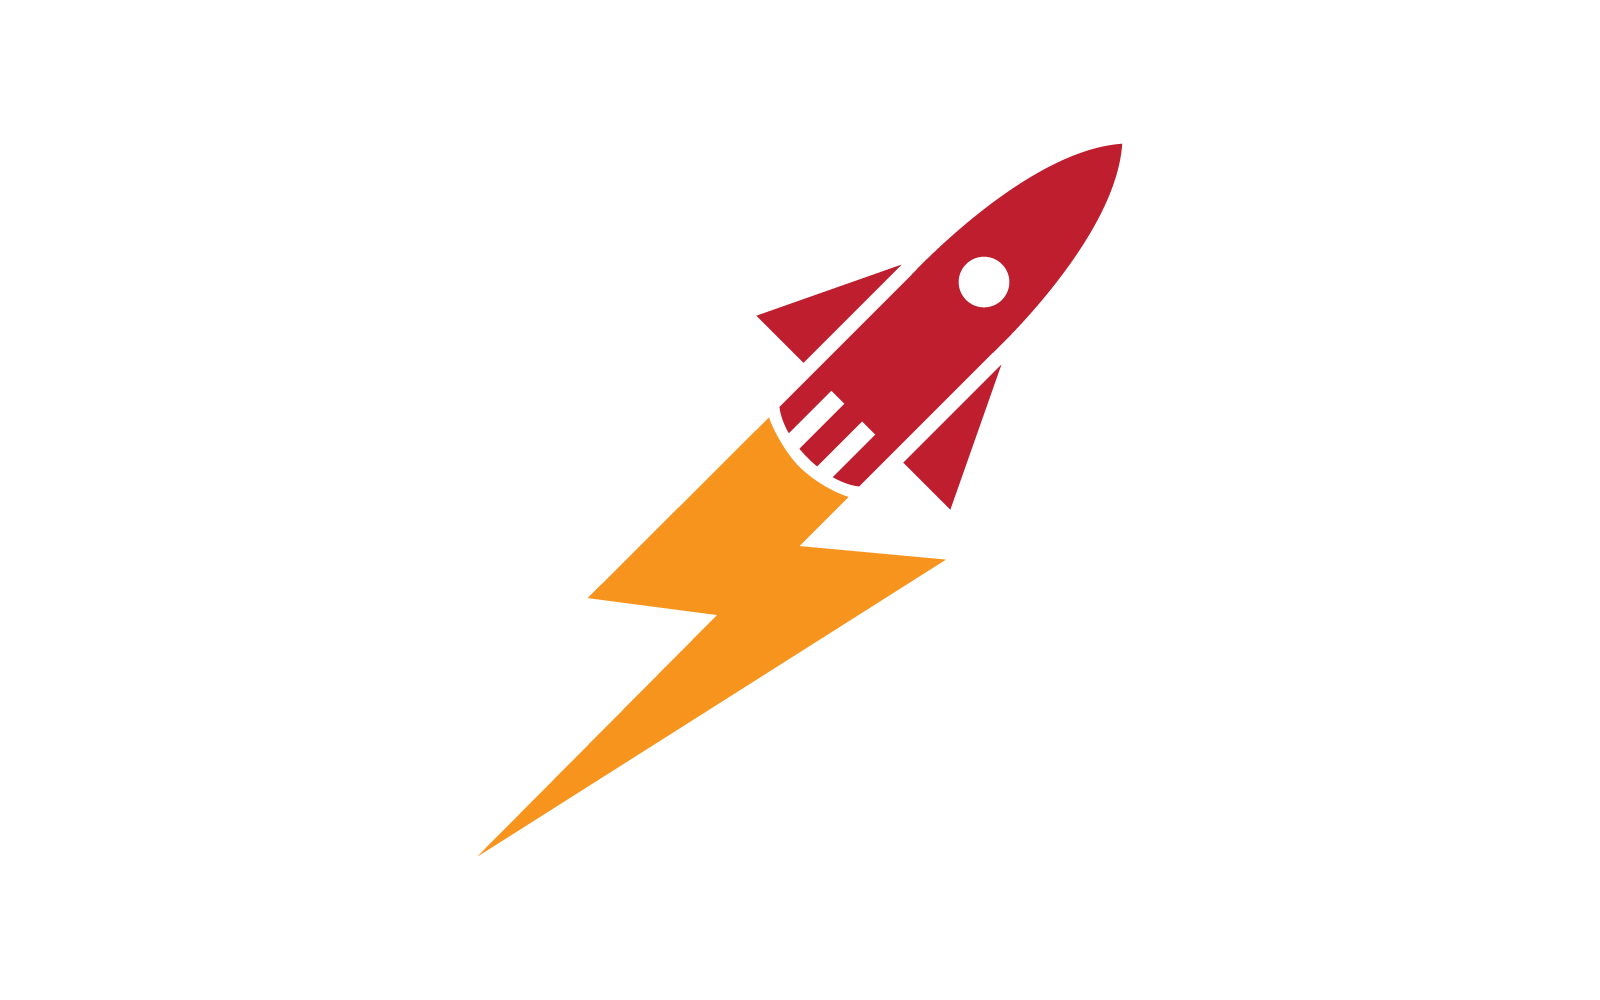 Rocket ilustration logo vector icon template eps 10 Logo Template